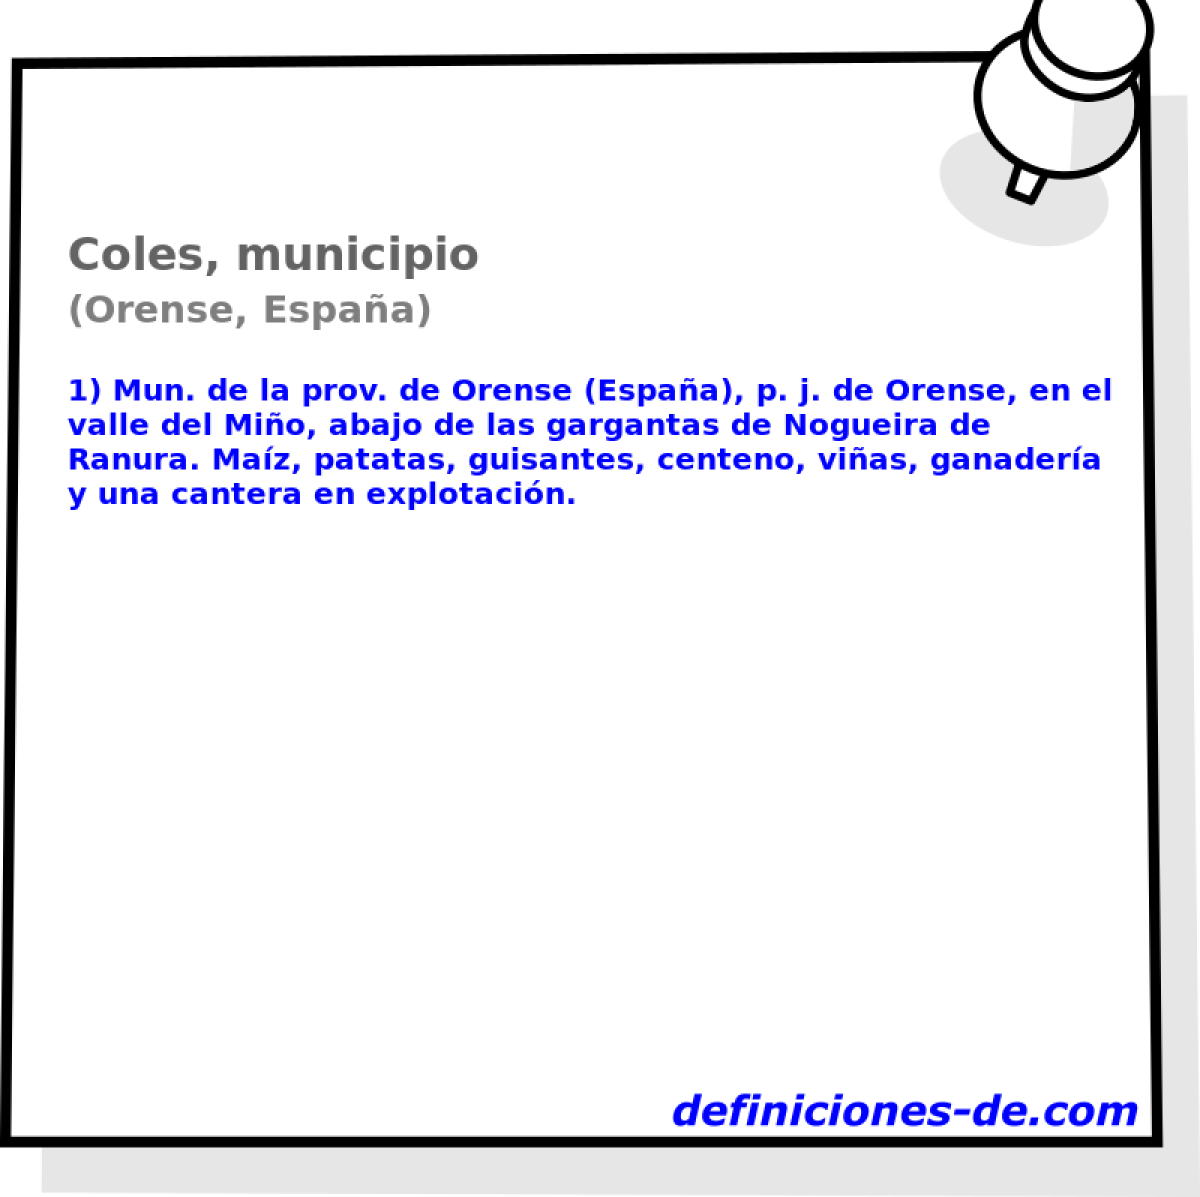 Coles, municipio (Orense, Espaa)